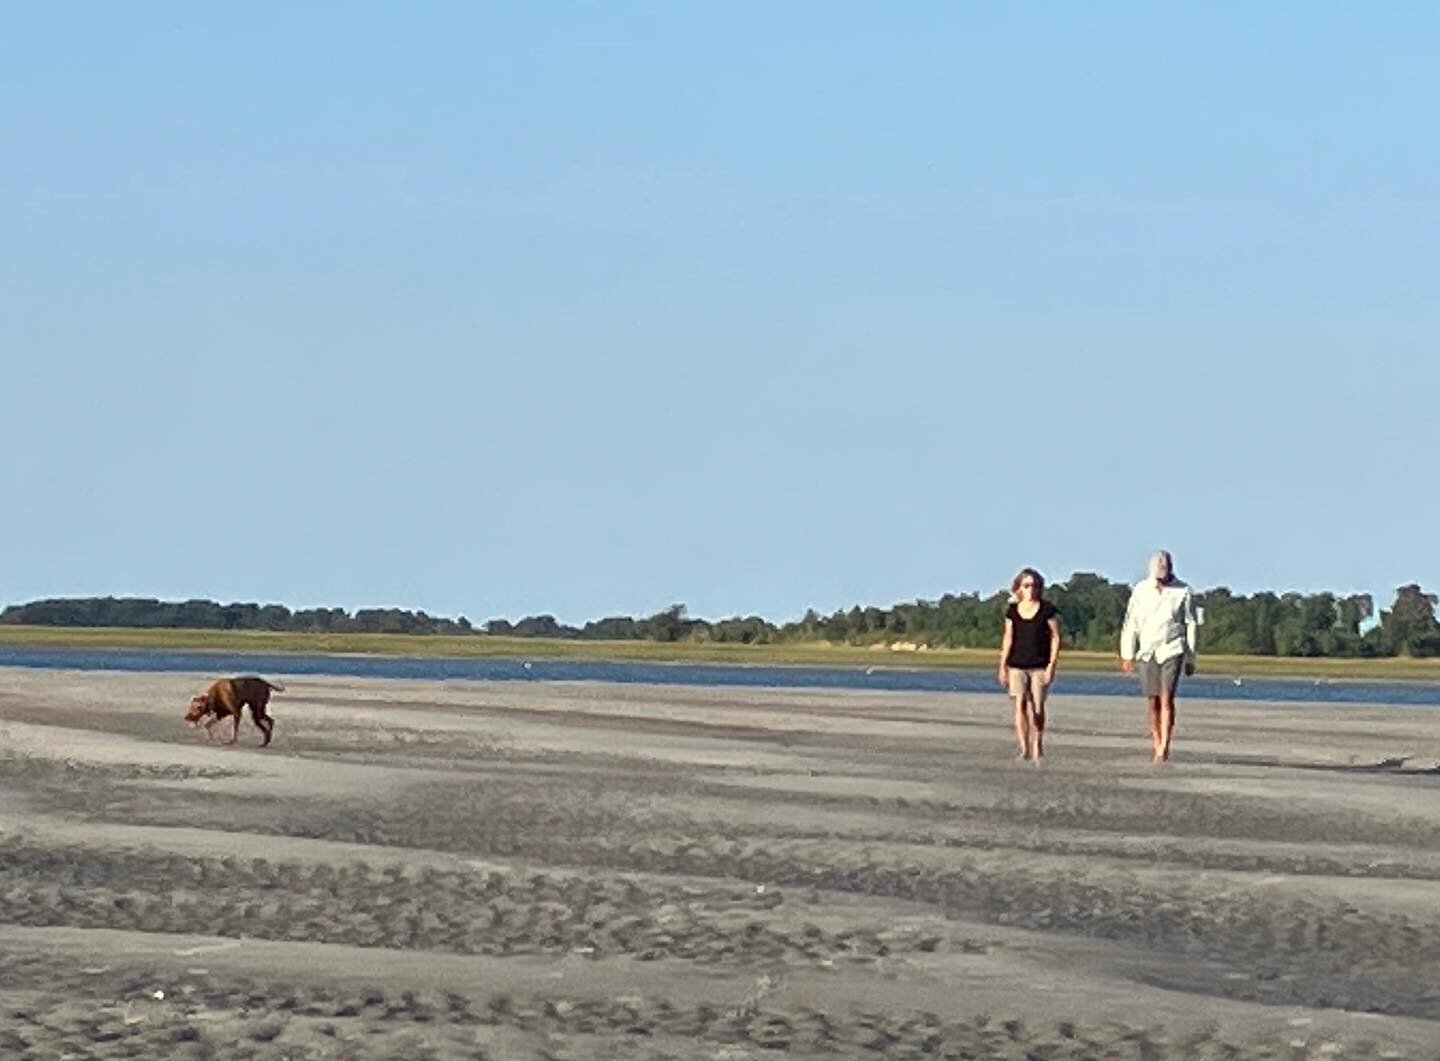 One of the last walks on the sand bar this year. #plumisland #middleground #ipswichbay #beachday #vizsla #vizslalove